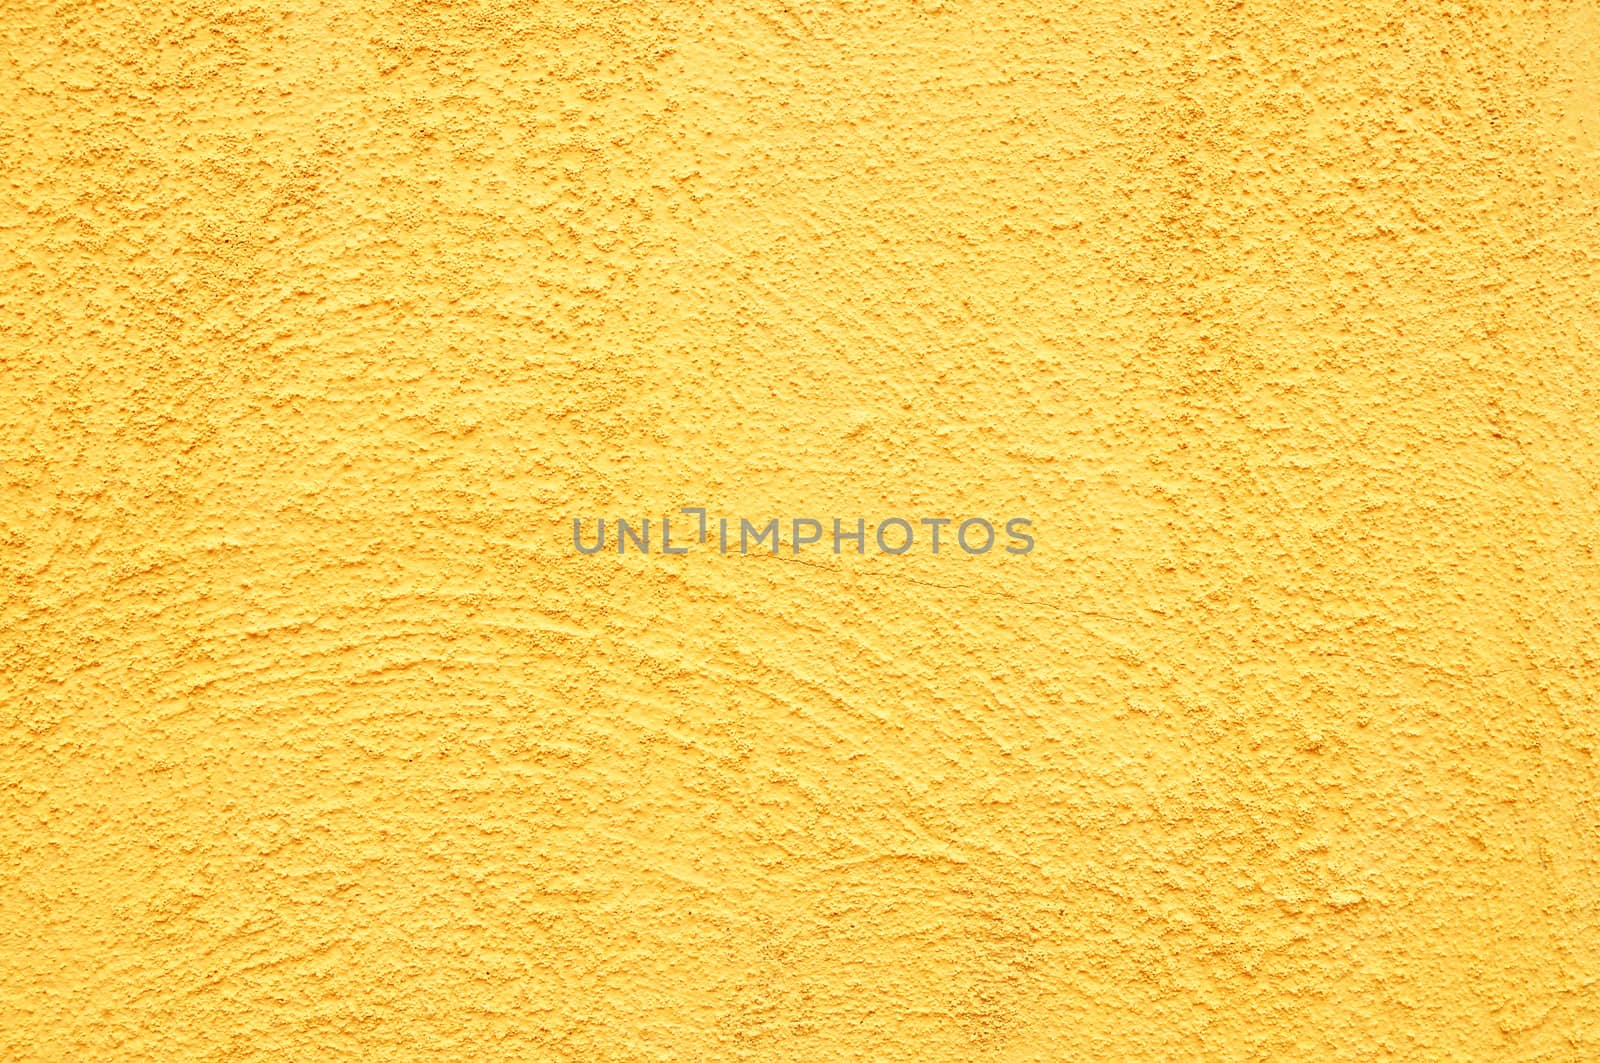 Retro yellow concrete wall background